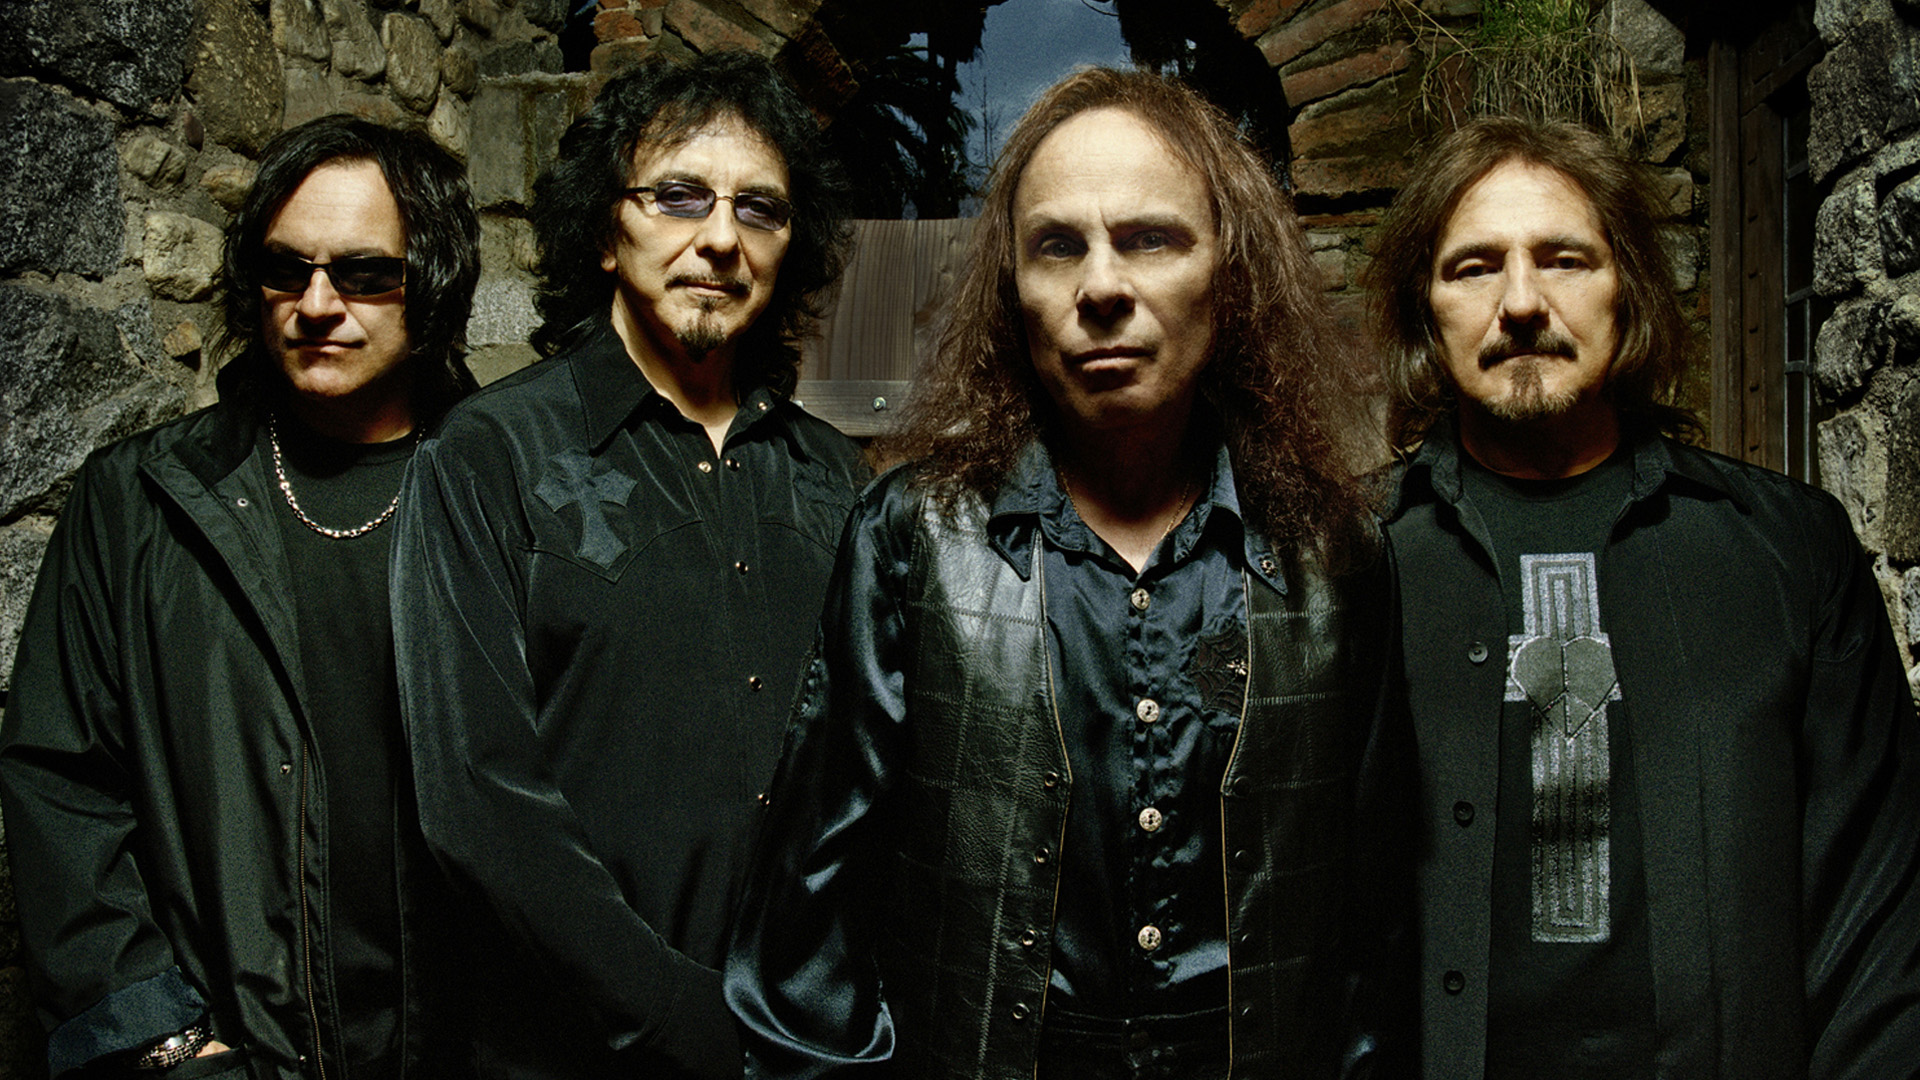 Ronnie James Dio Vs. Ozzy Osbourne: Choosing the Better Frontman For Black Sabbath